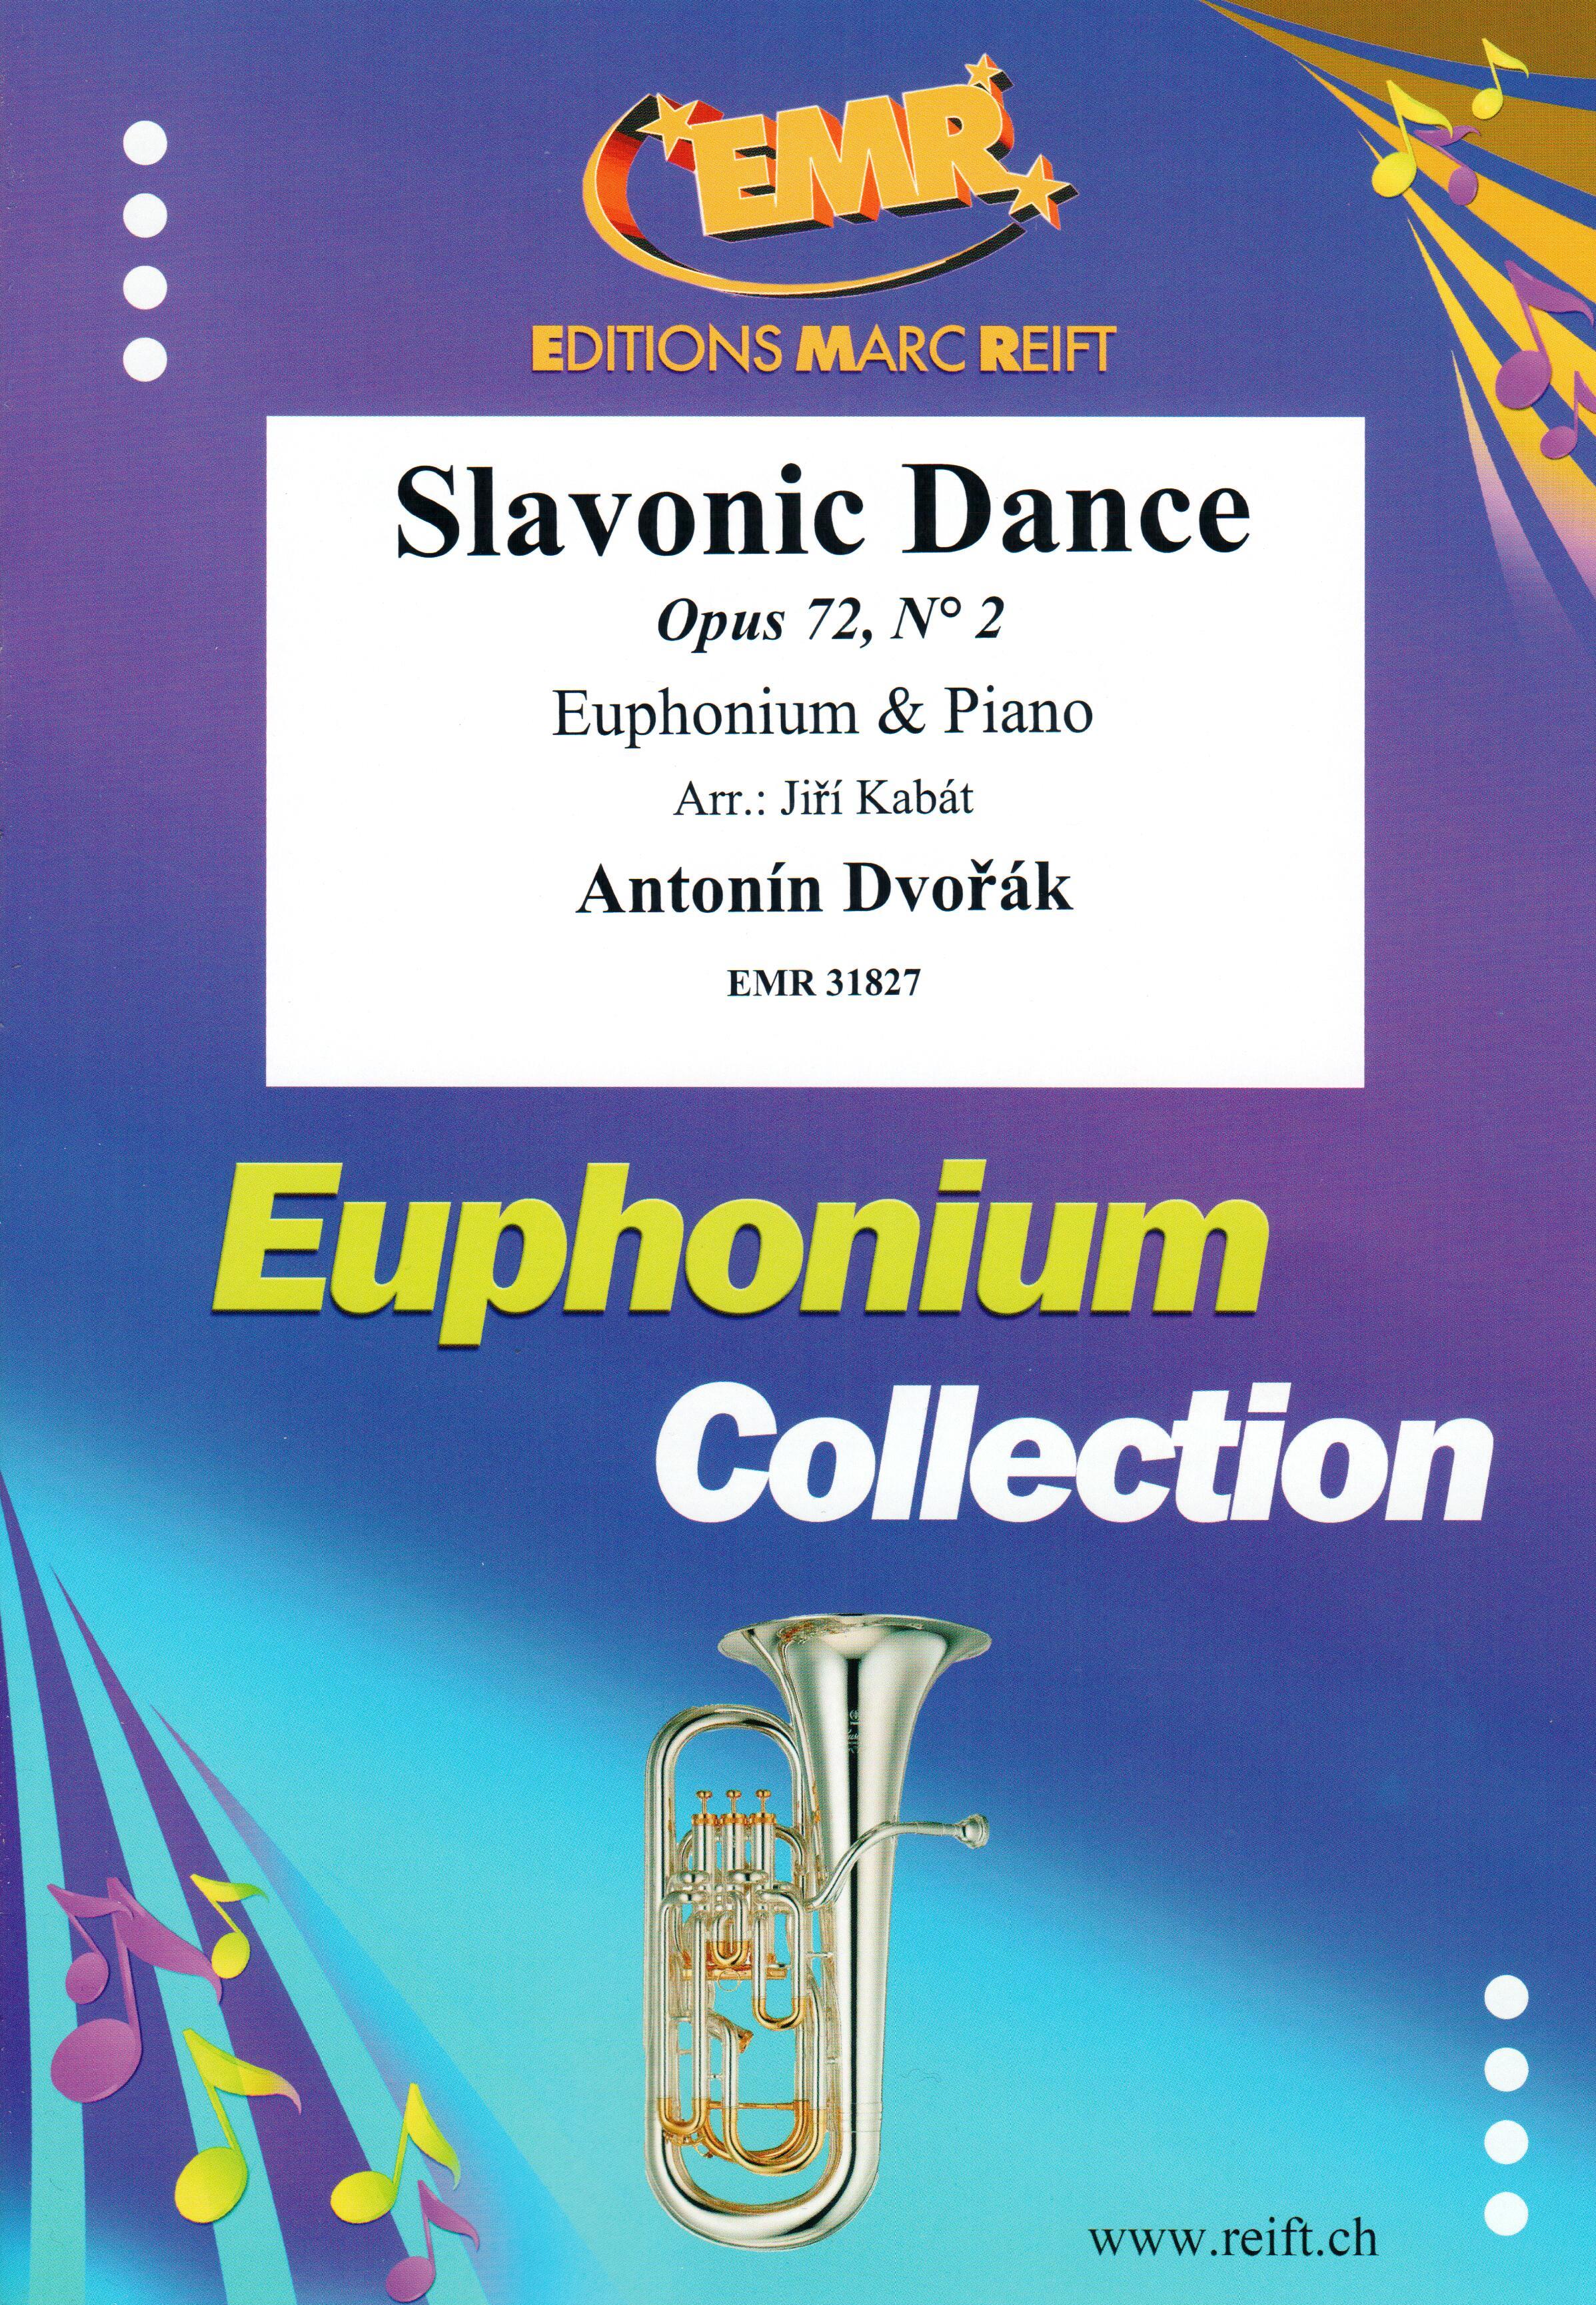 SLAVONIC DANCE, SOLOS - Euphonium